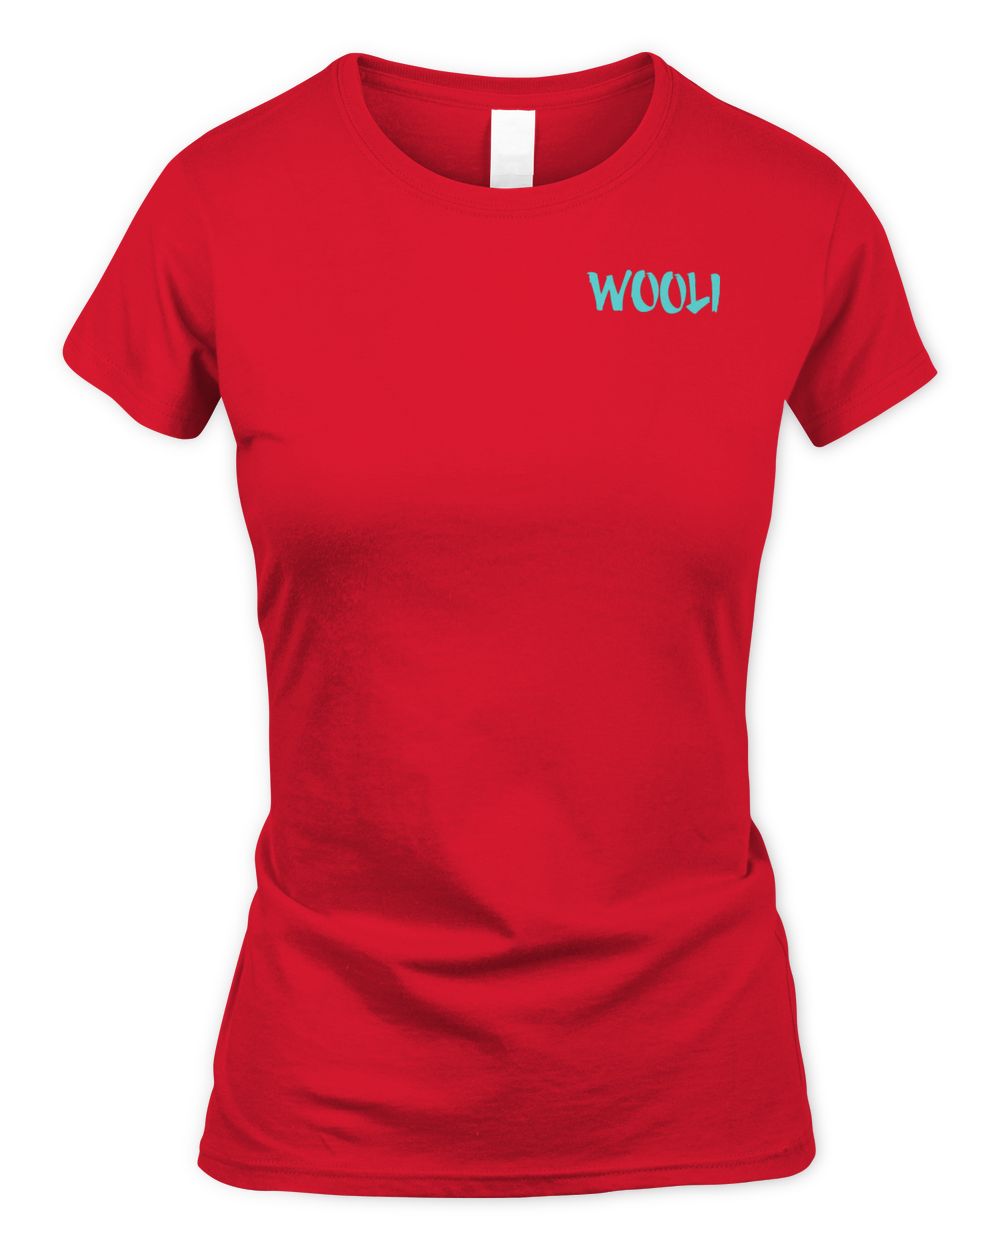 Wooli Merch Logo Shirt Women's Soft Style Fitted T-Shirt red 